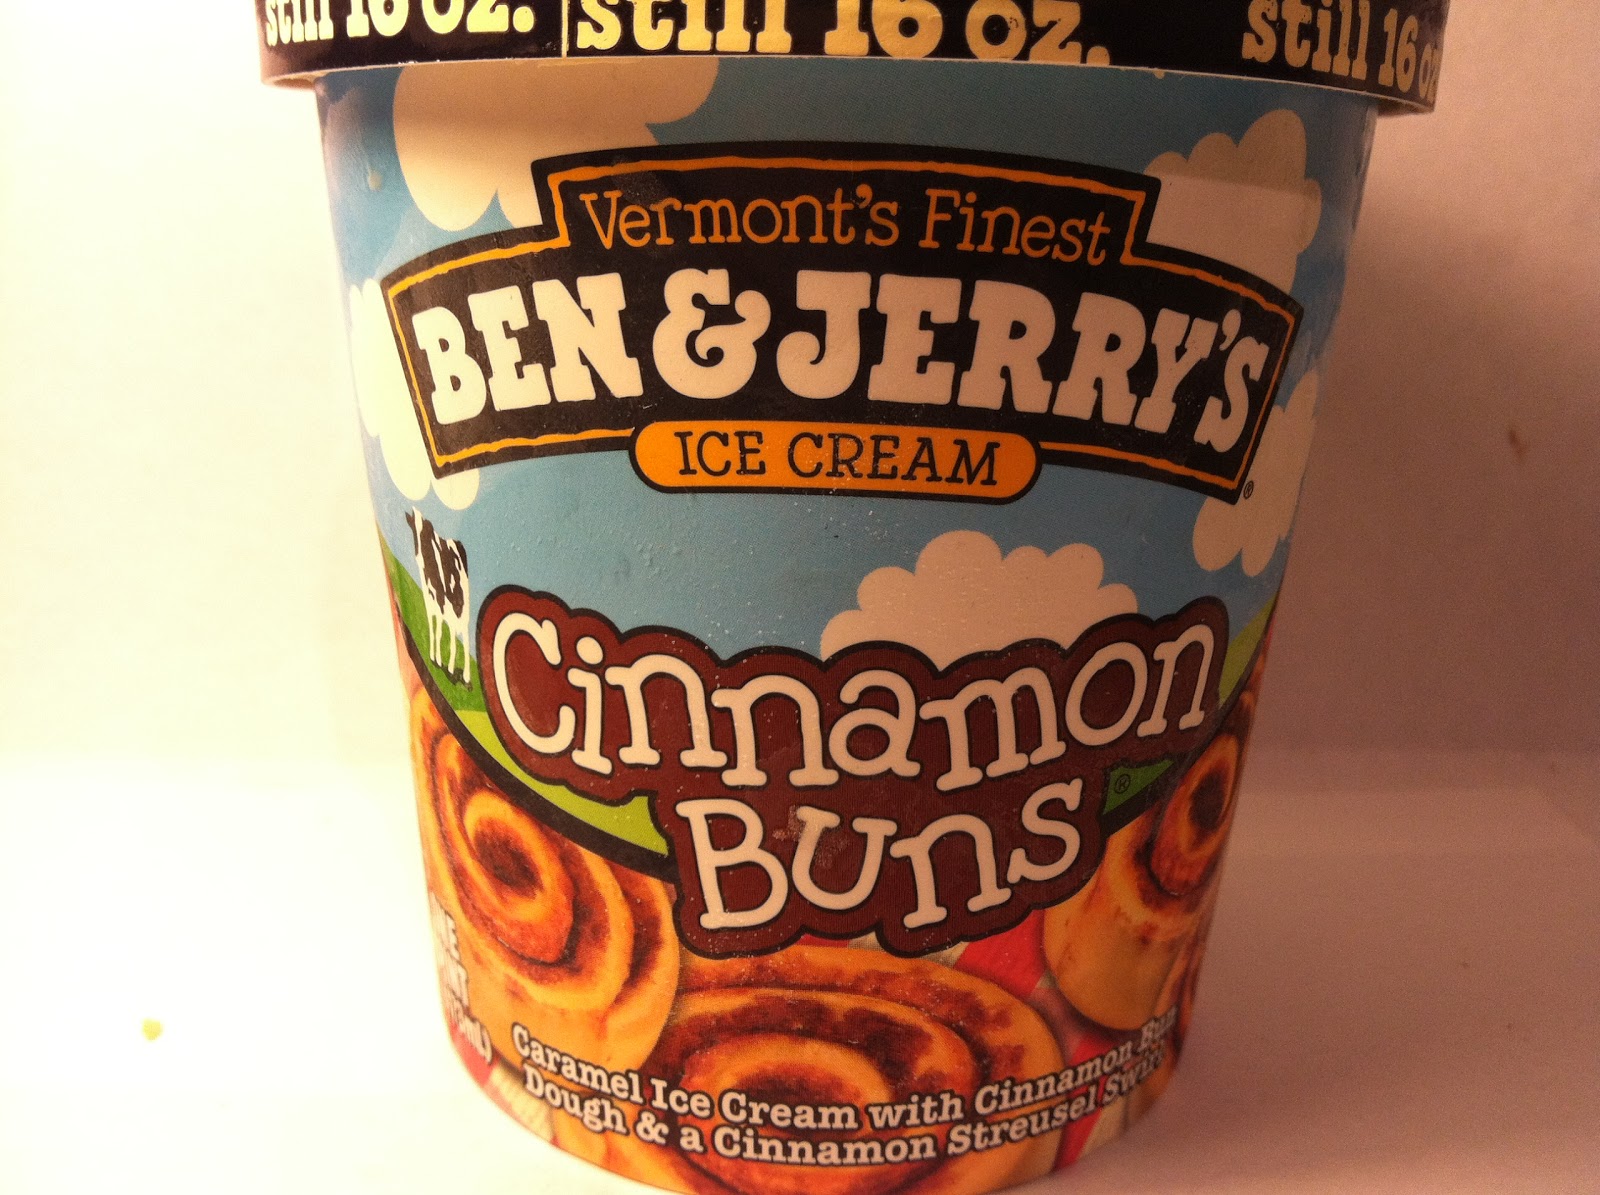 Джерри Синнамон. Crazy Mix мороженое. Cinnamon buns гель для душа. Jerry's endless Travels.